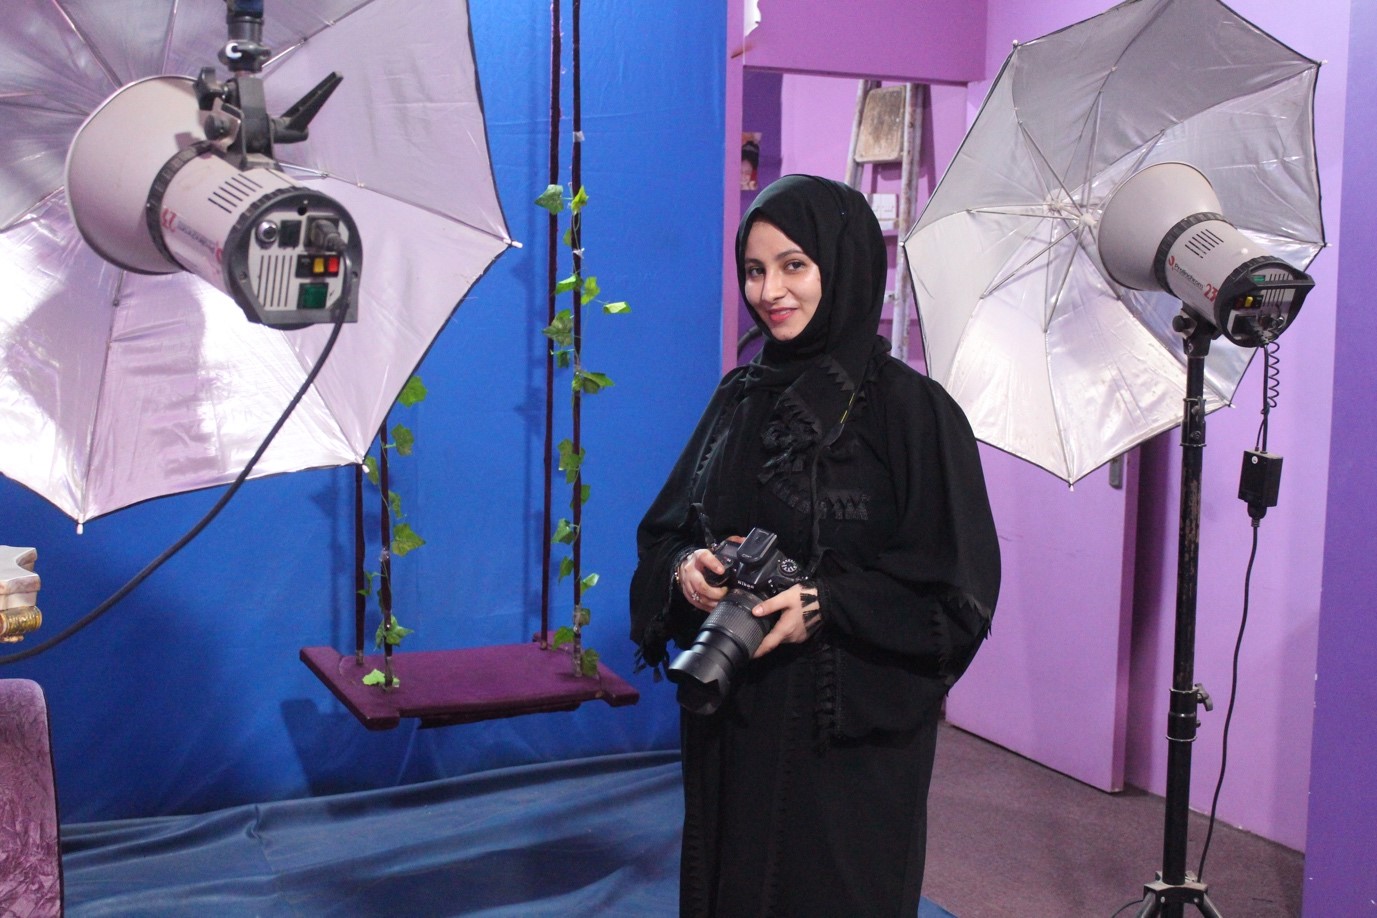 A woman in a black burqa holding a camera